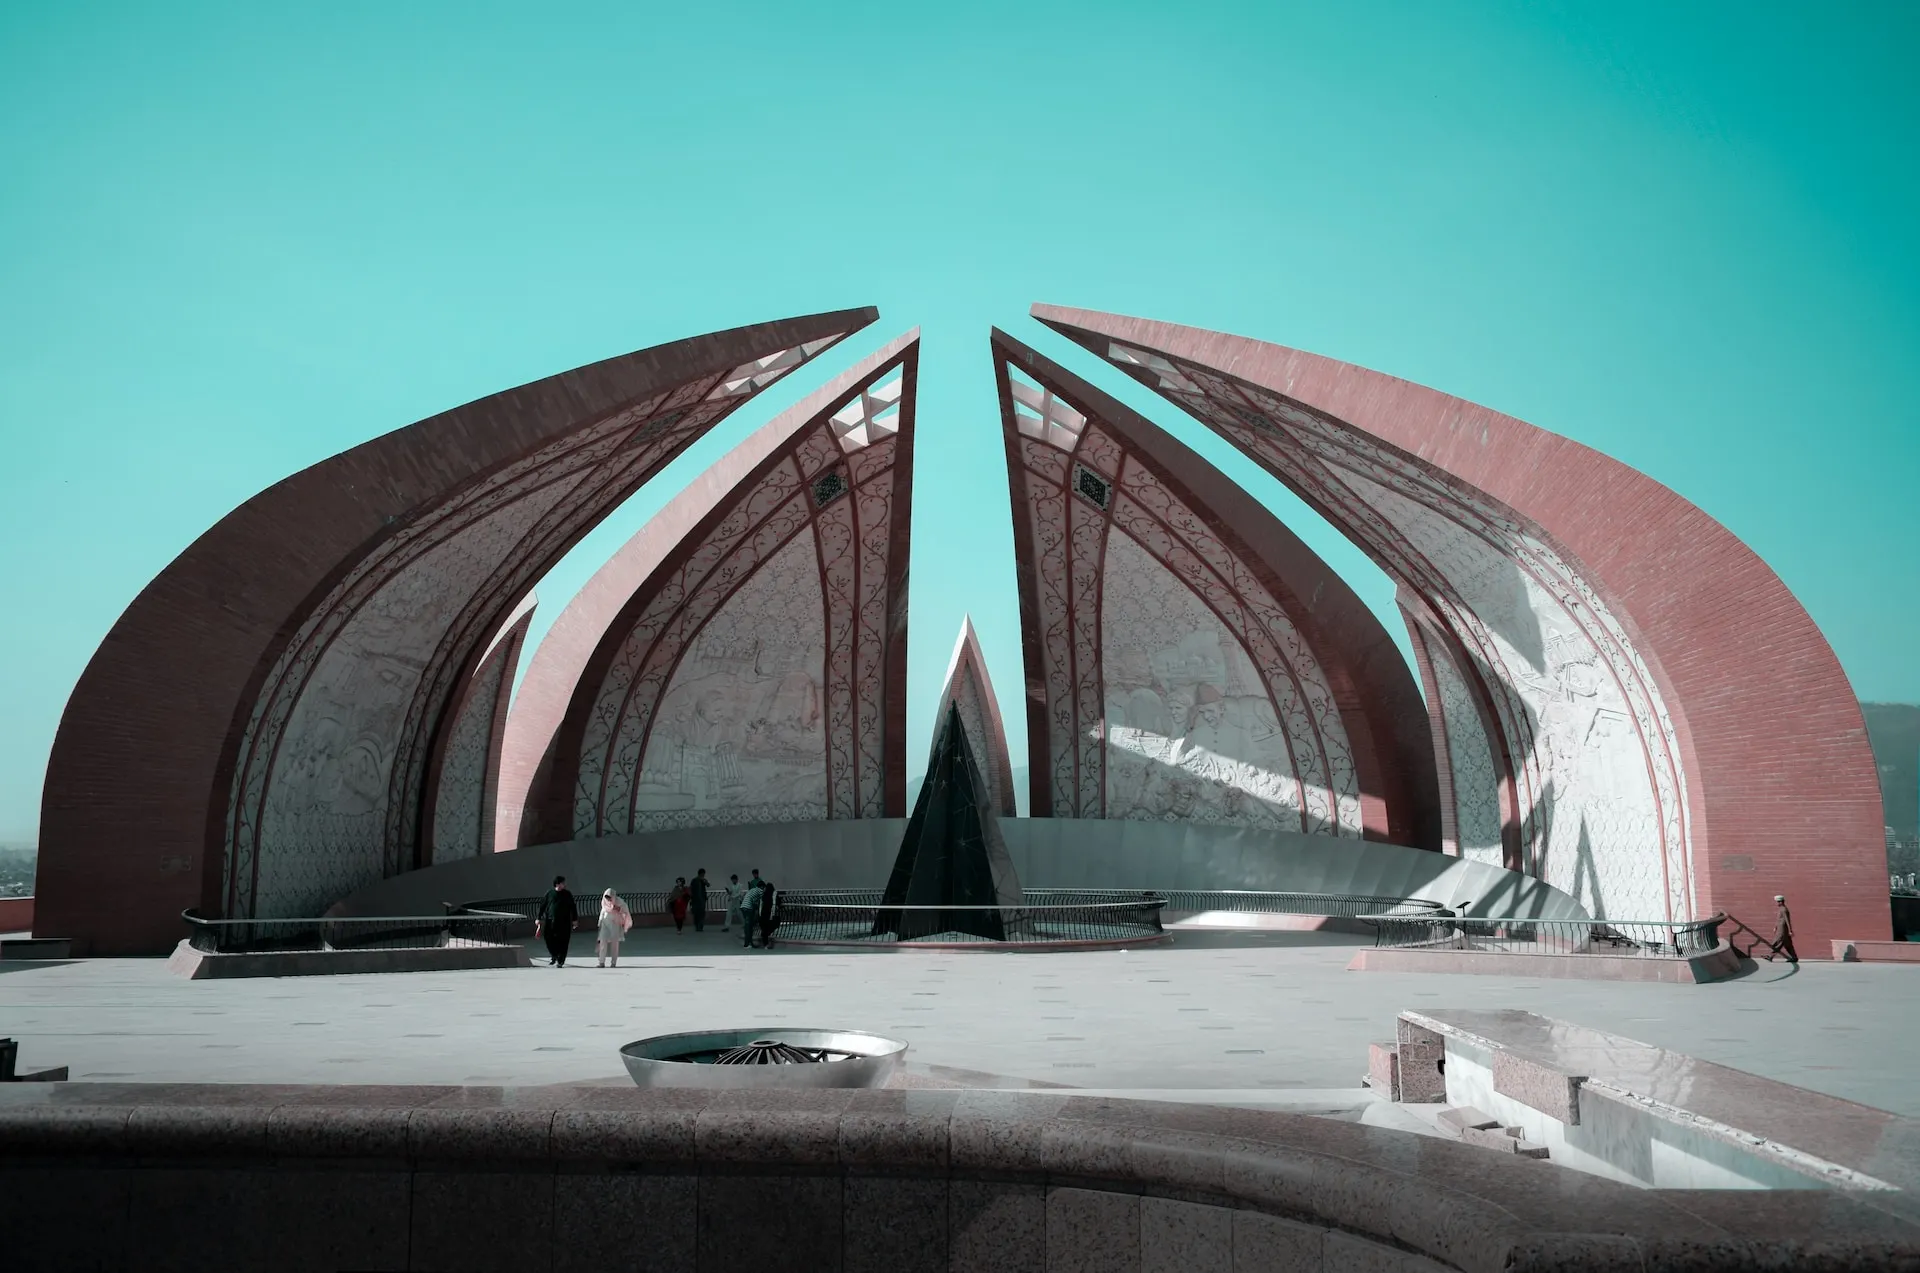 Pakistan Monument Museum, Source: Photo by Syed Fahim on Unsplash